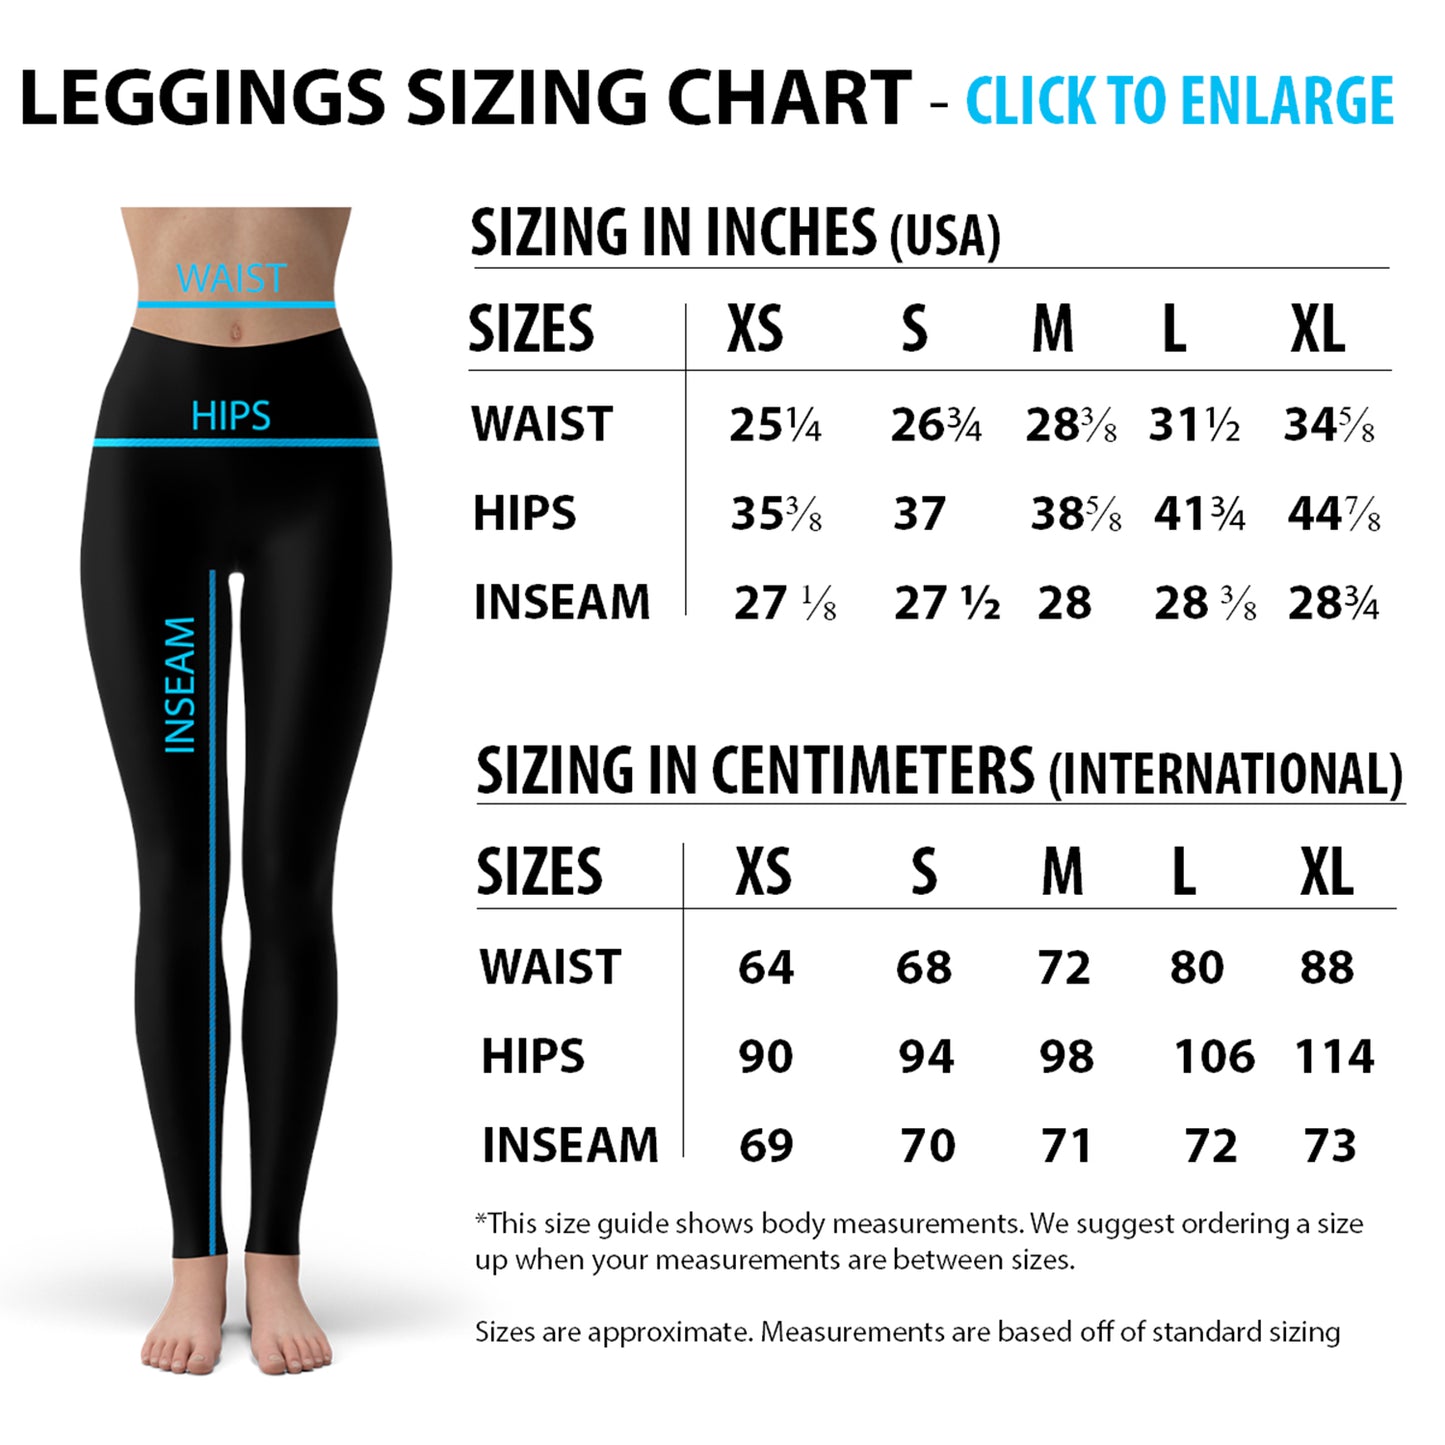 Women's White Geometric Art Yoga Pants/Leggings